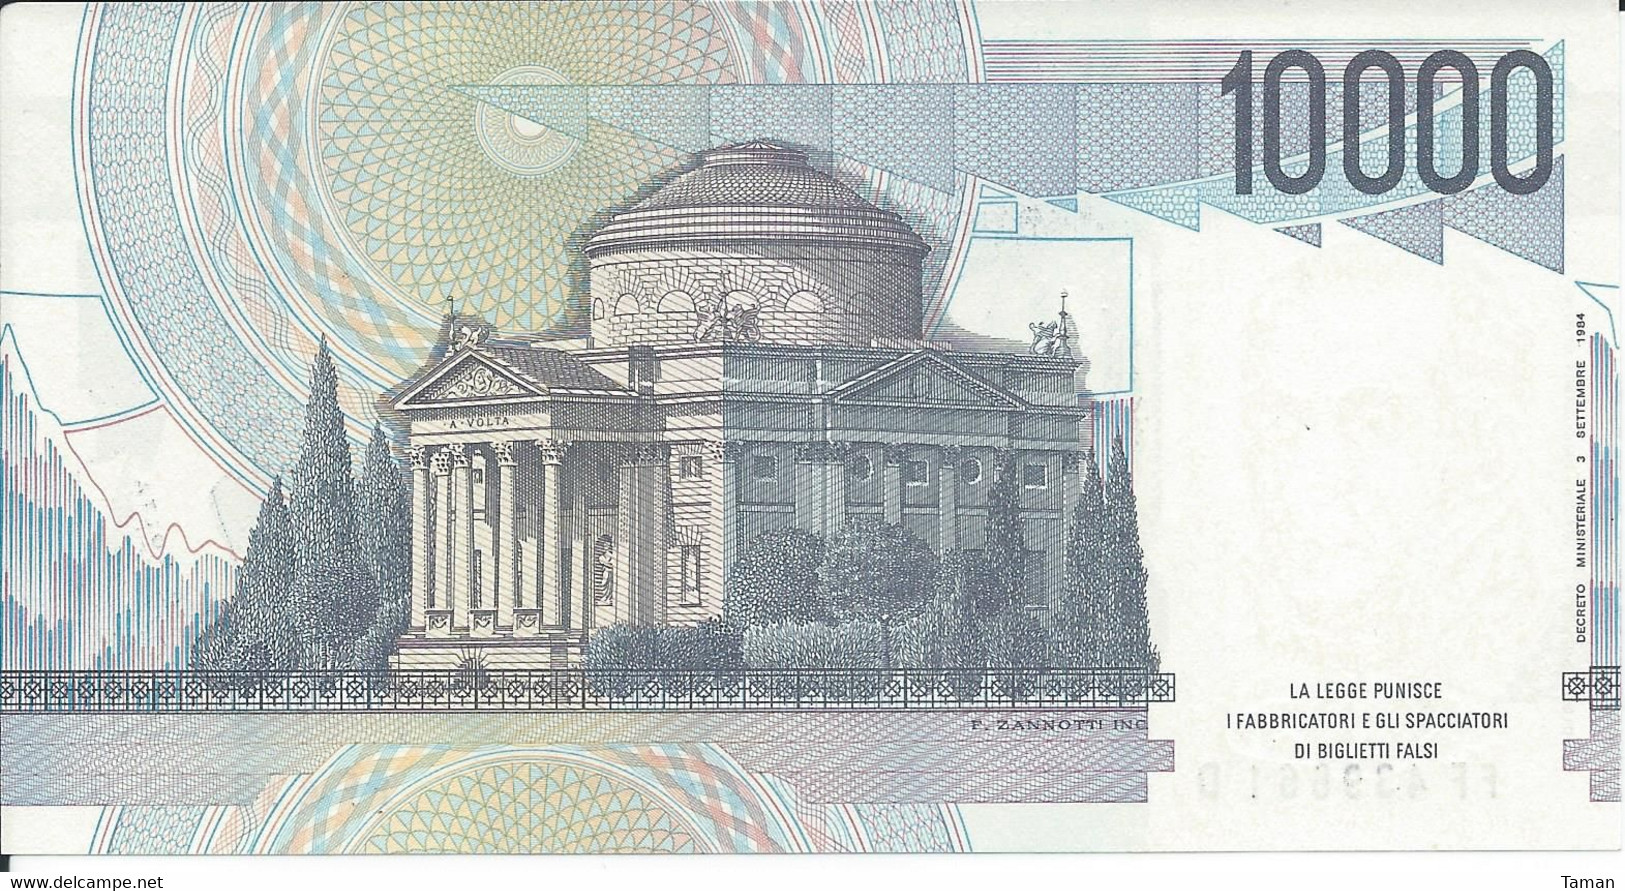 ITALIE   -   10000  Lires 1984   -- UNC --   Italia - 10.000 Lire